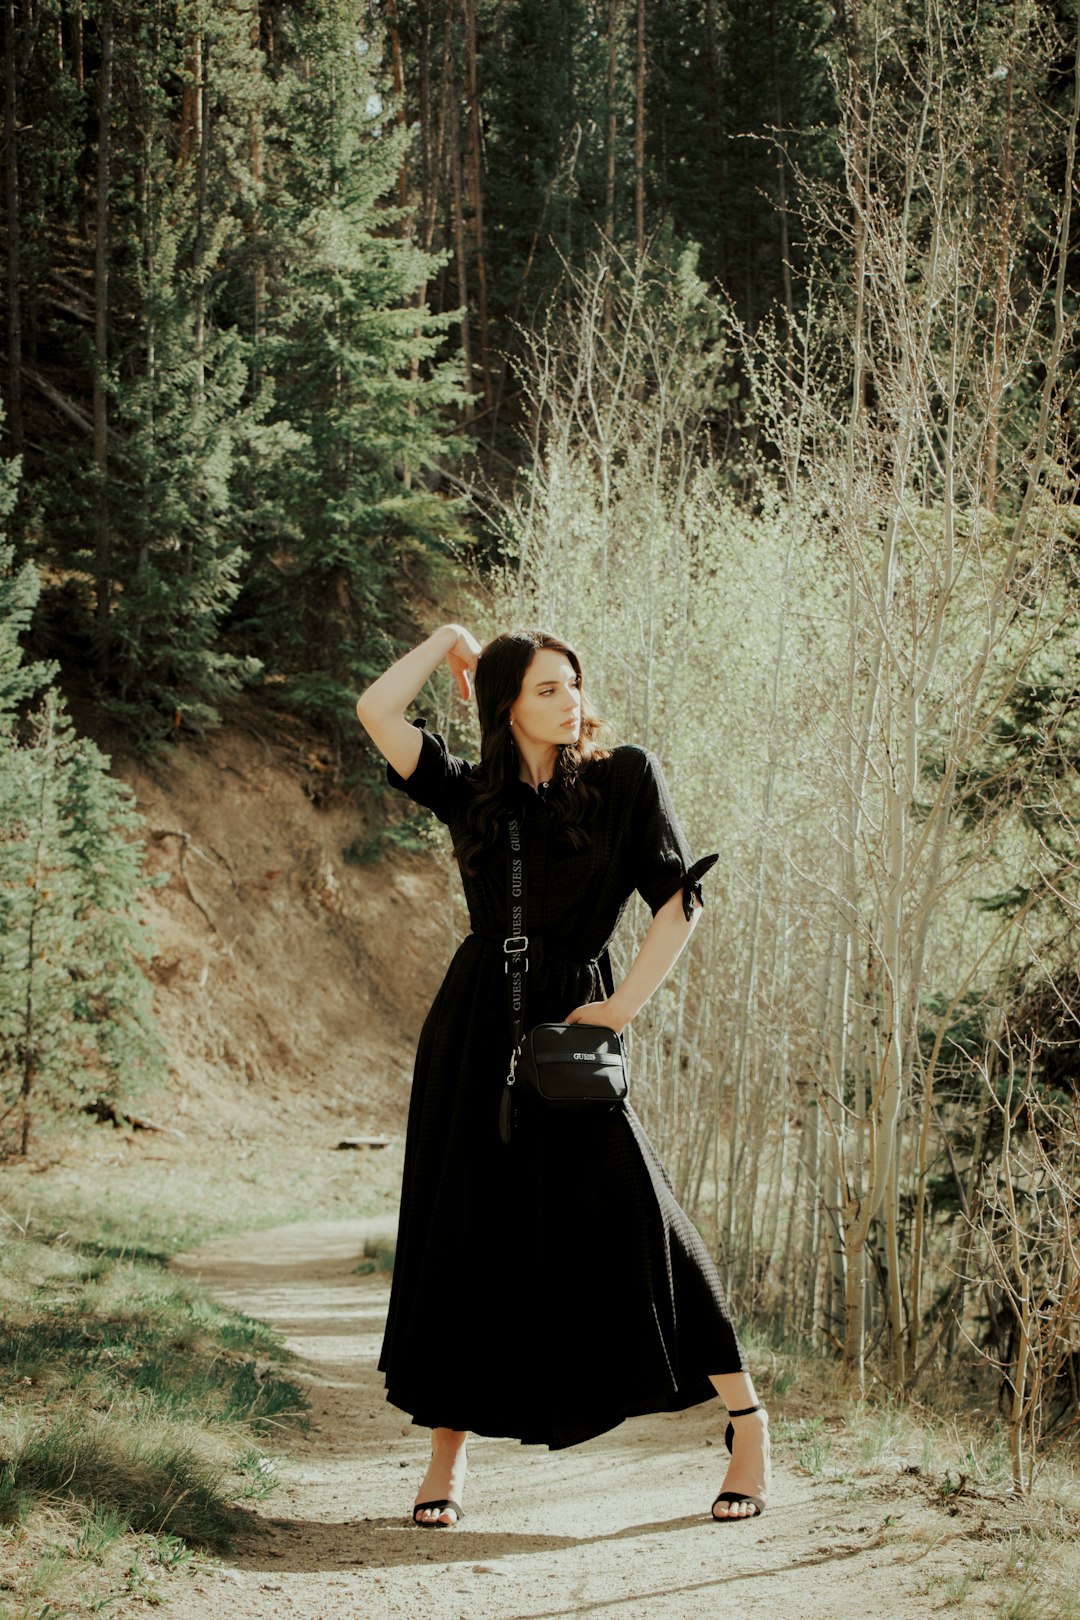 woman in black dress standing on dirt road